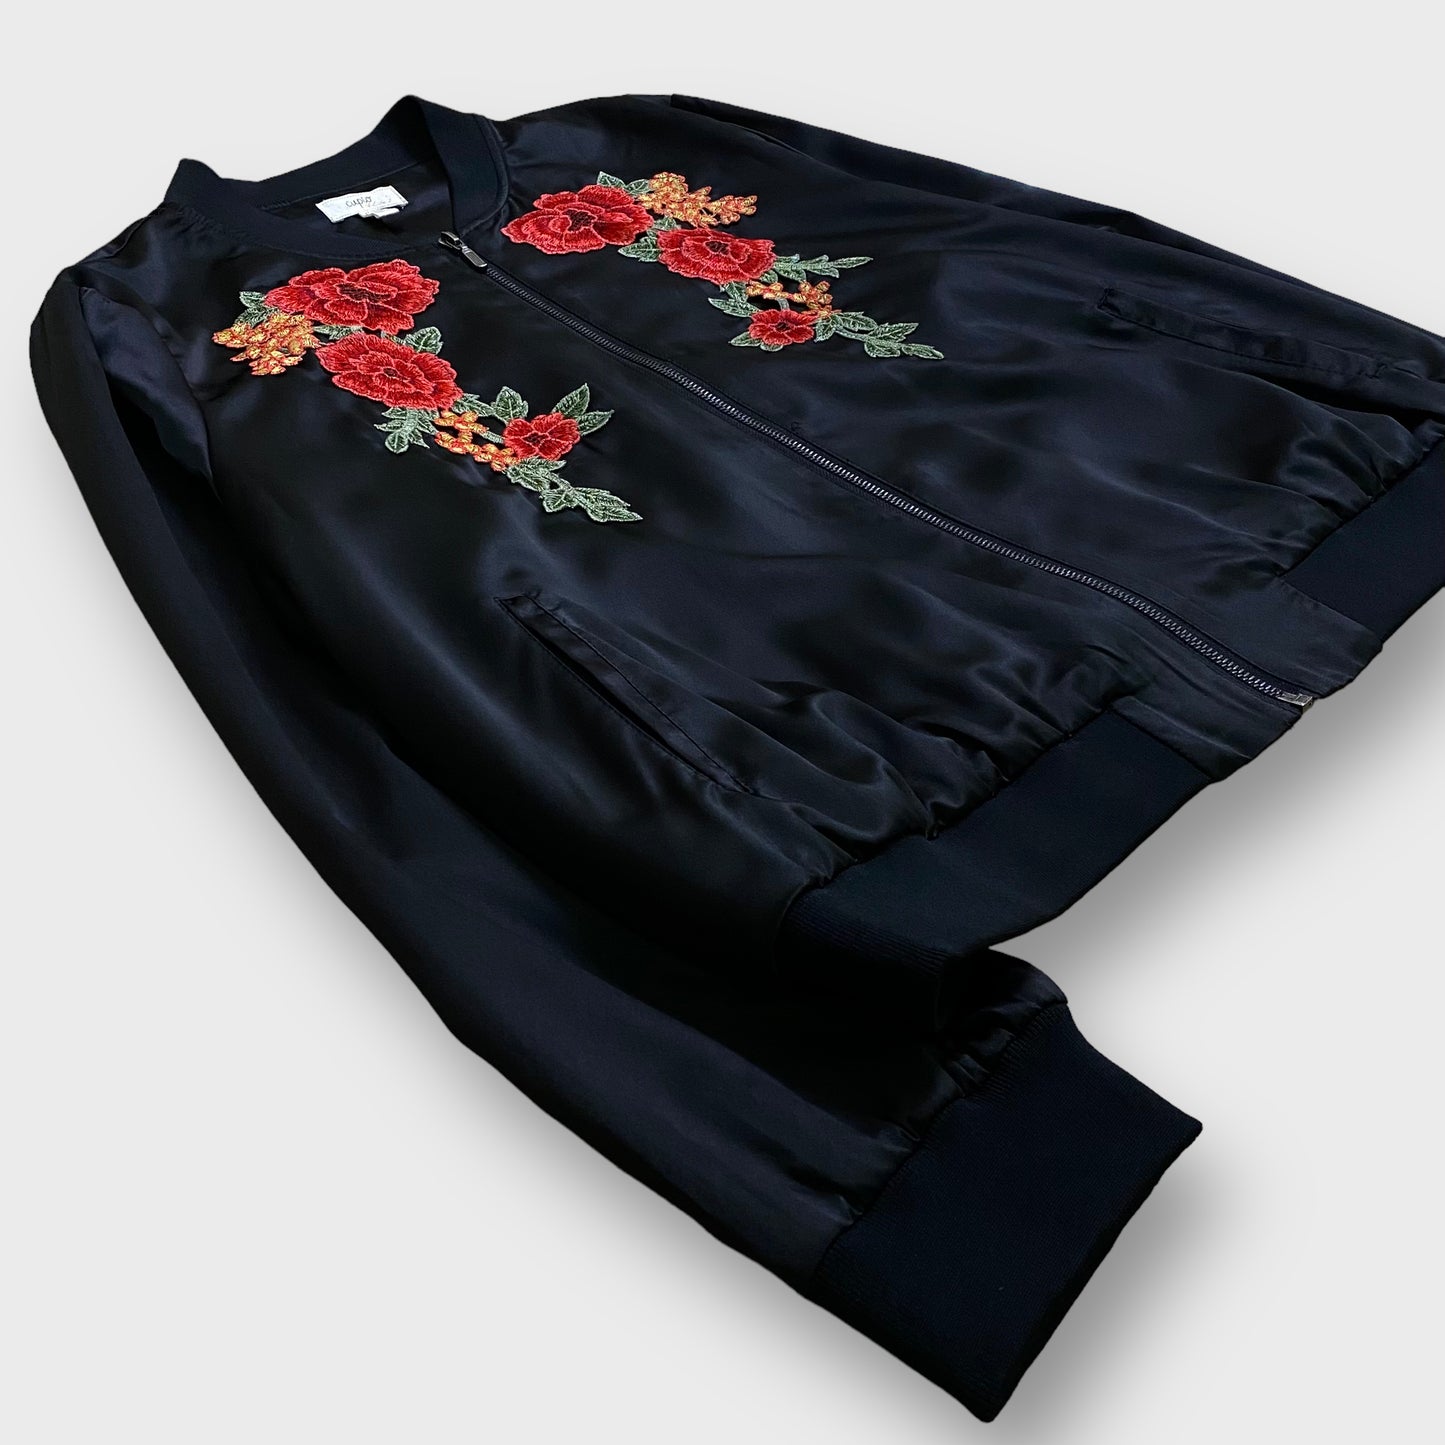 Flower embroidery blouson jacket